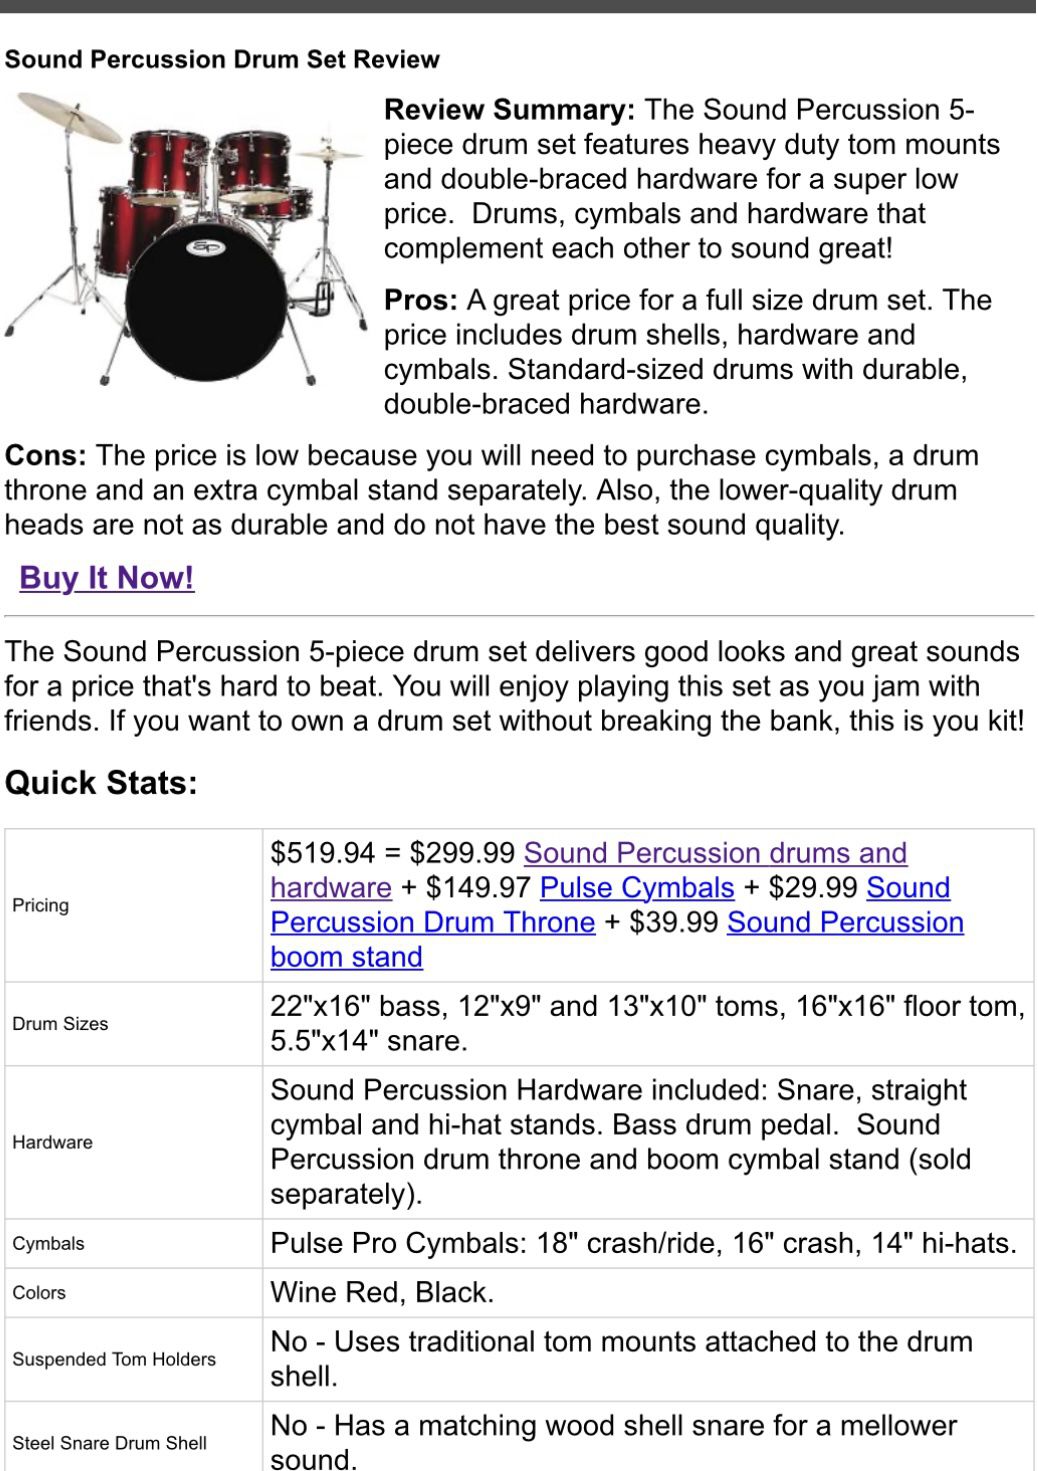 Used -Sound Percussion Drum Set